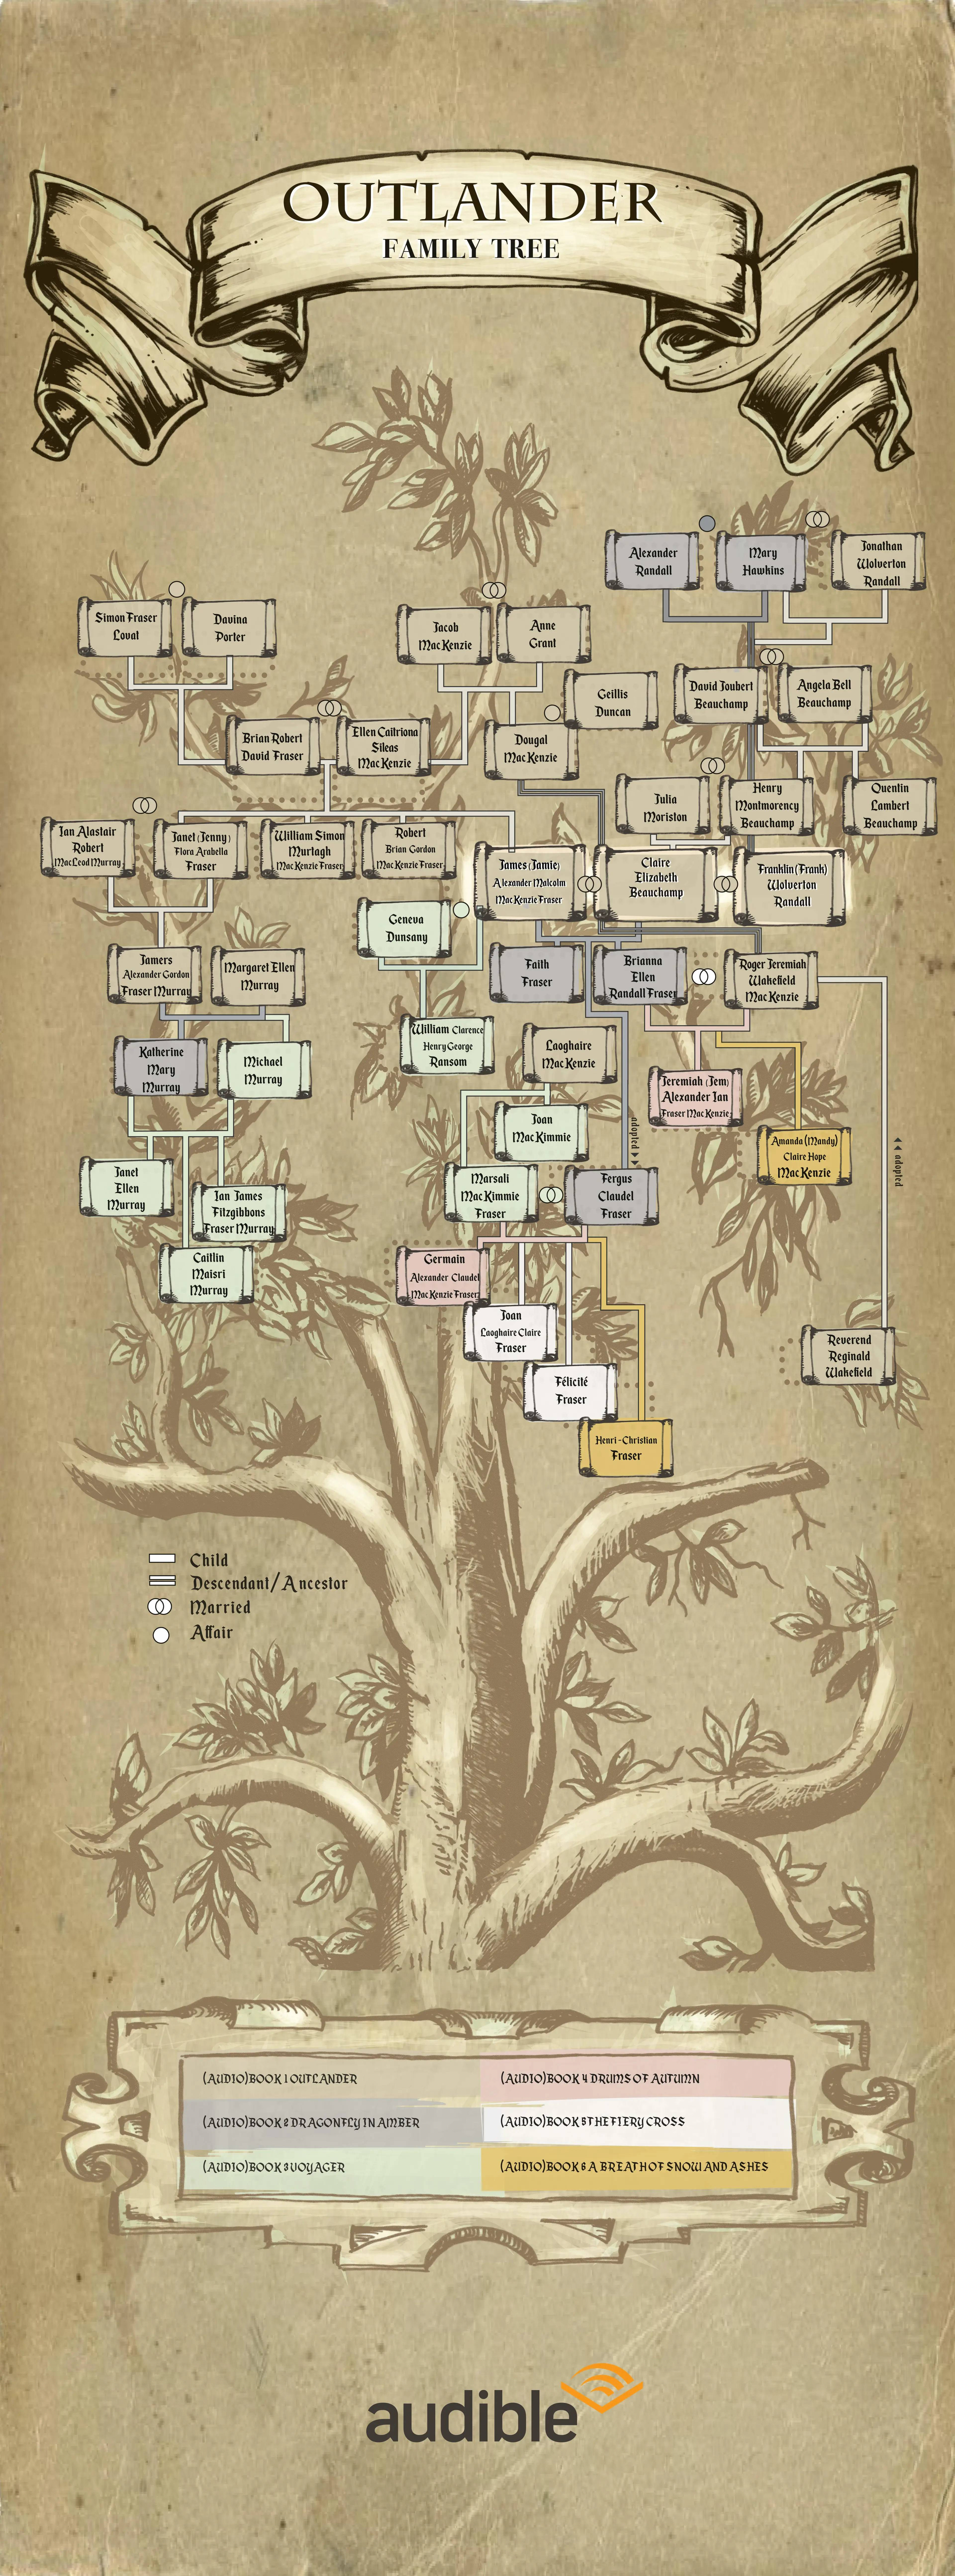 audible-outlander-family-tree